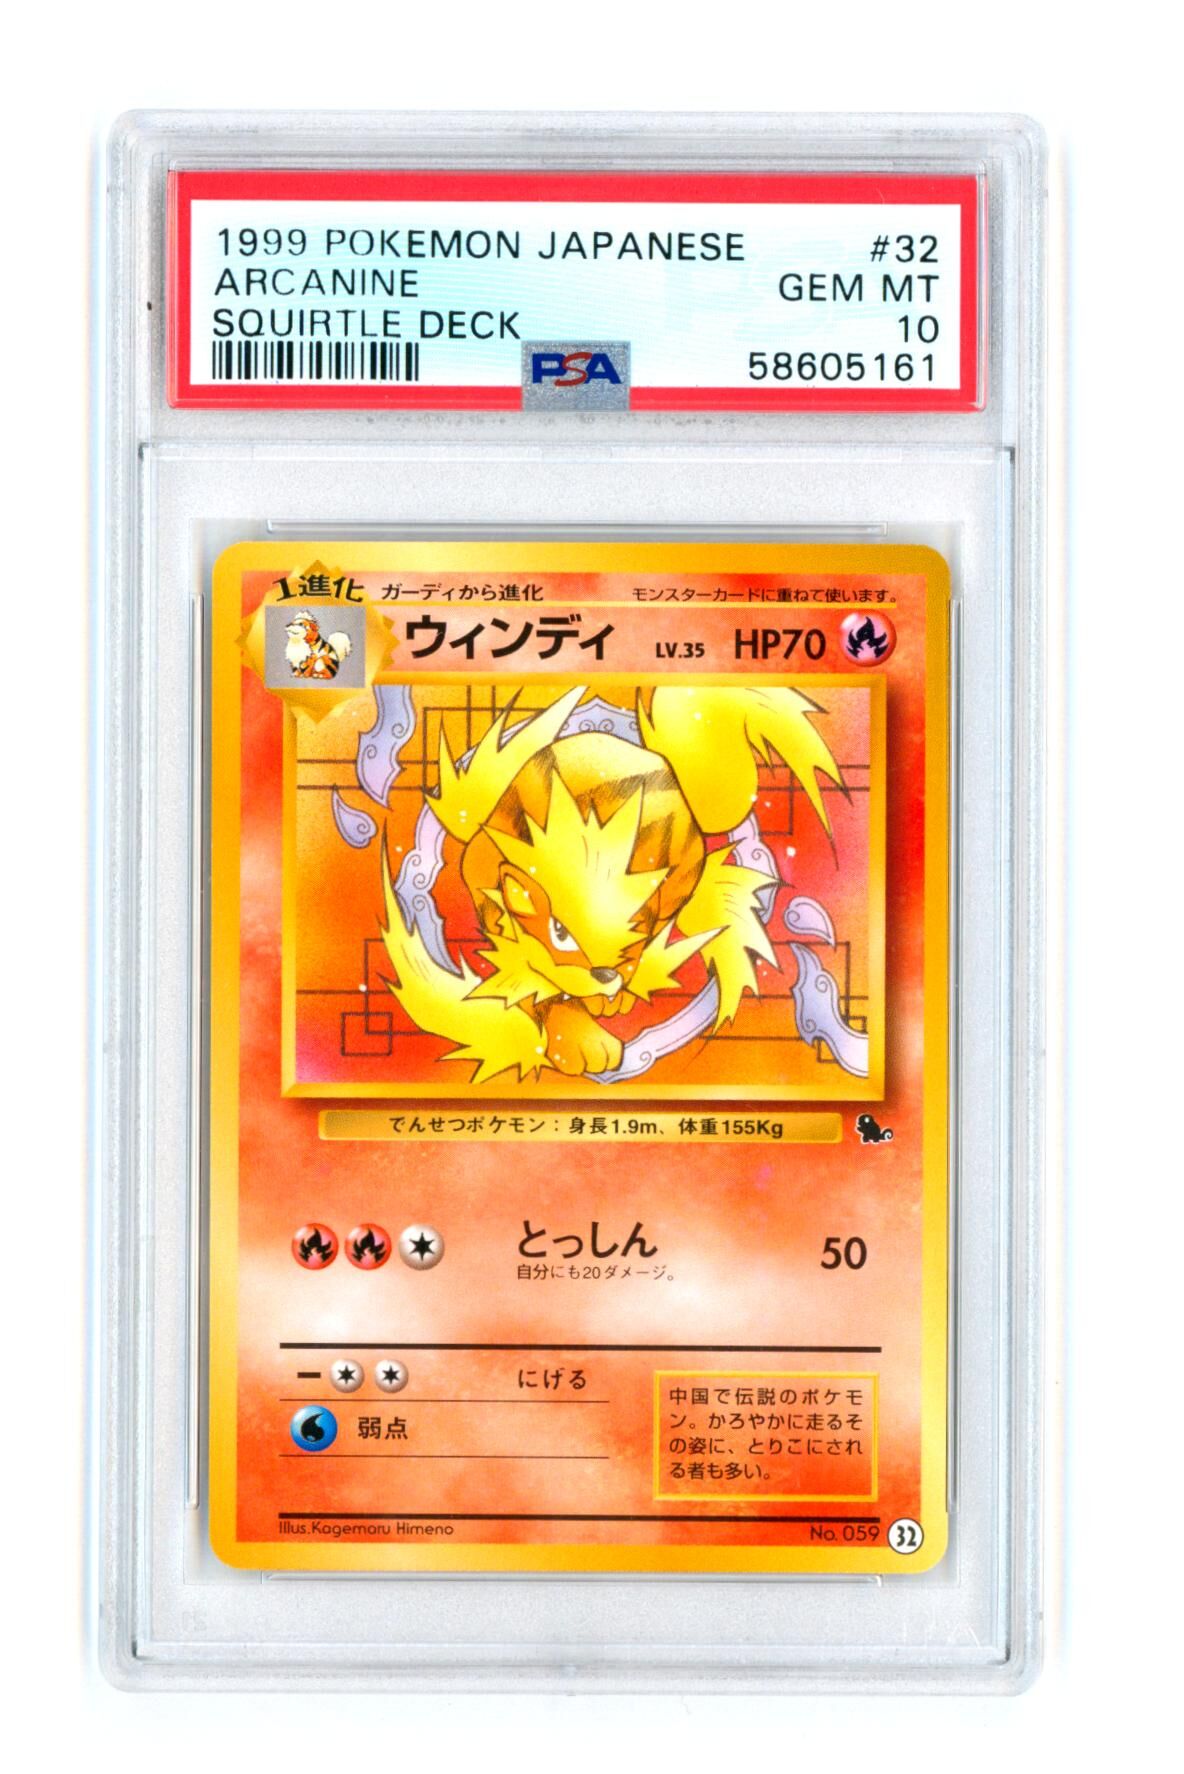 Arcanine #32 - Squirtle Deck - Japanese - PSA 10 GEM MT - Pokémon